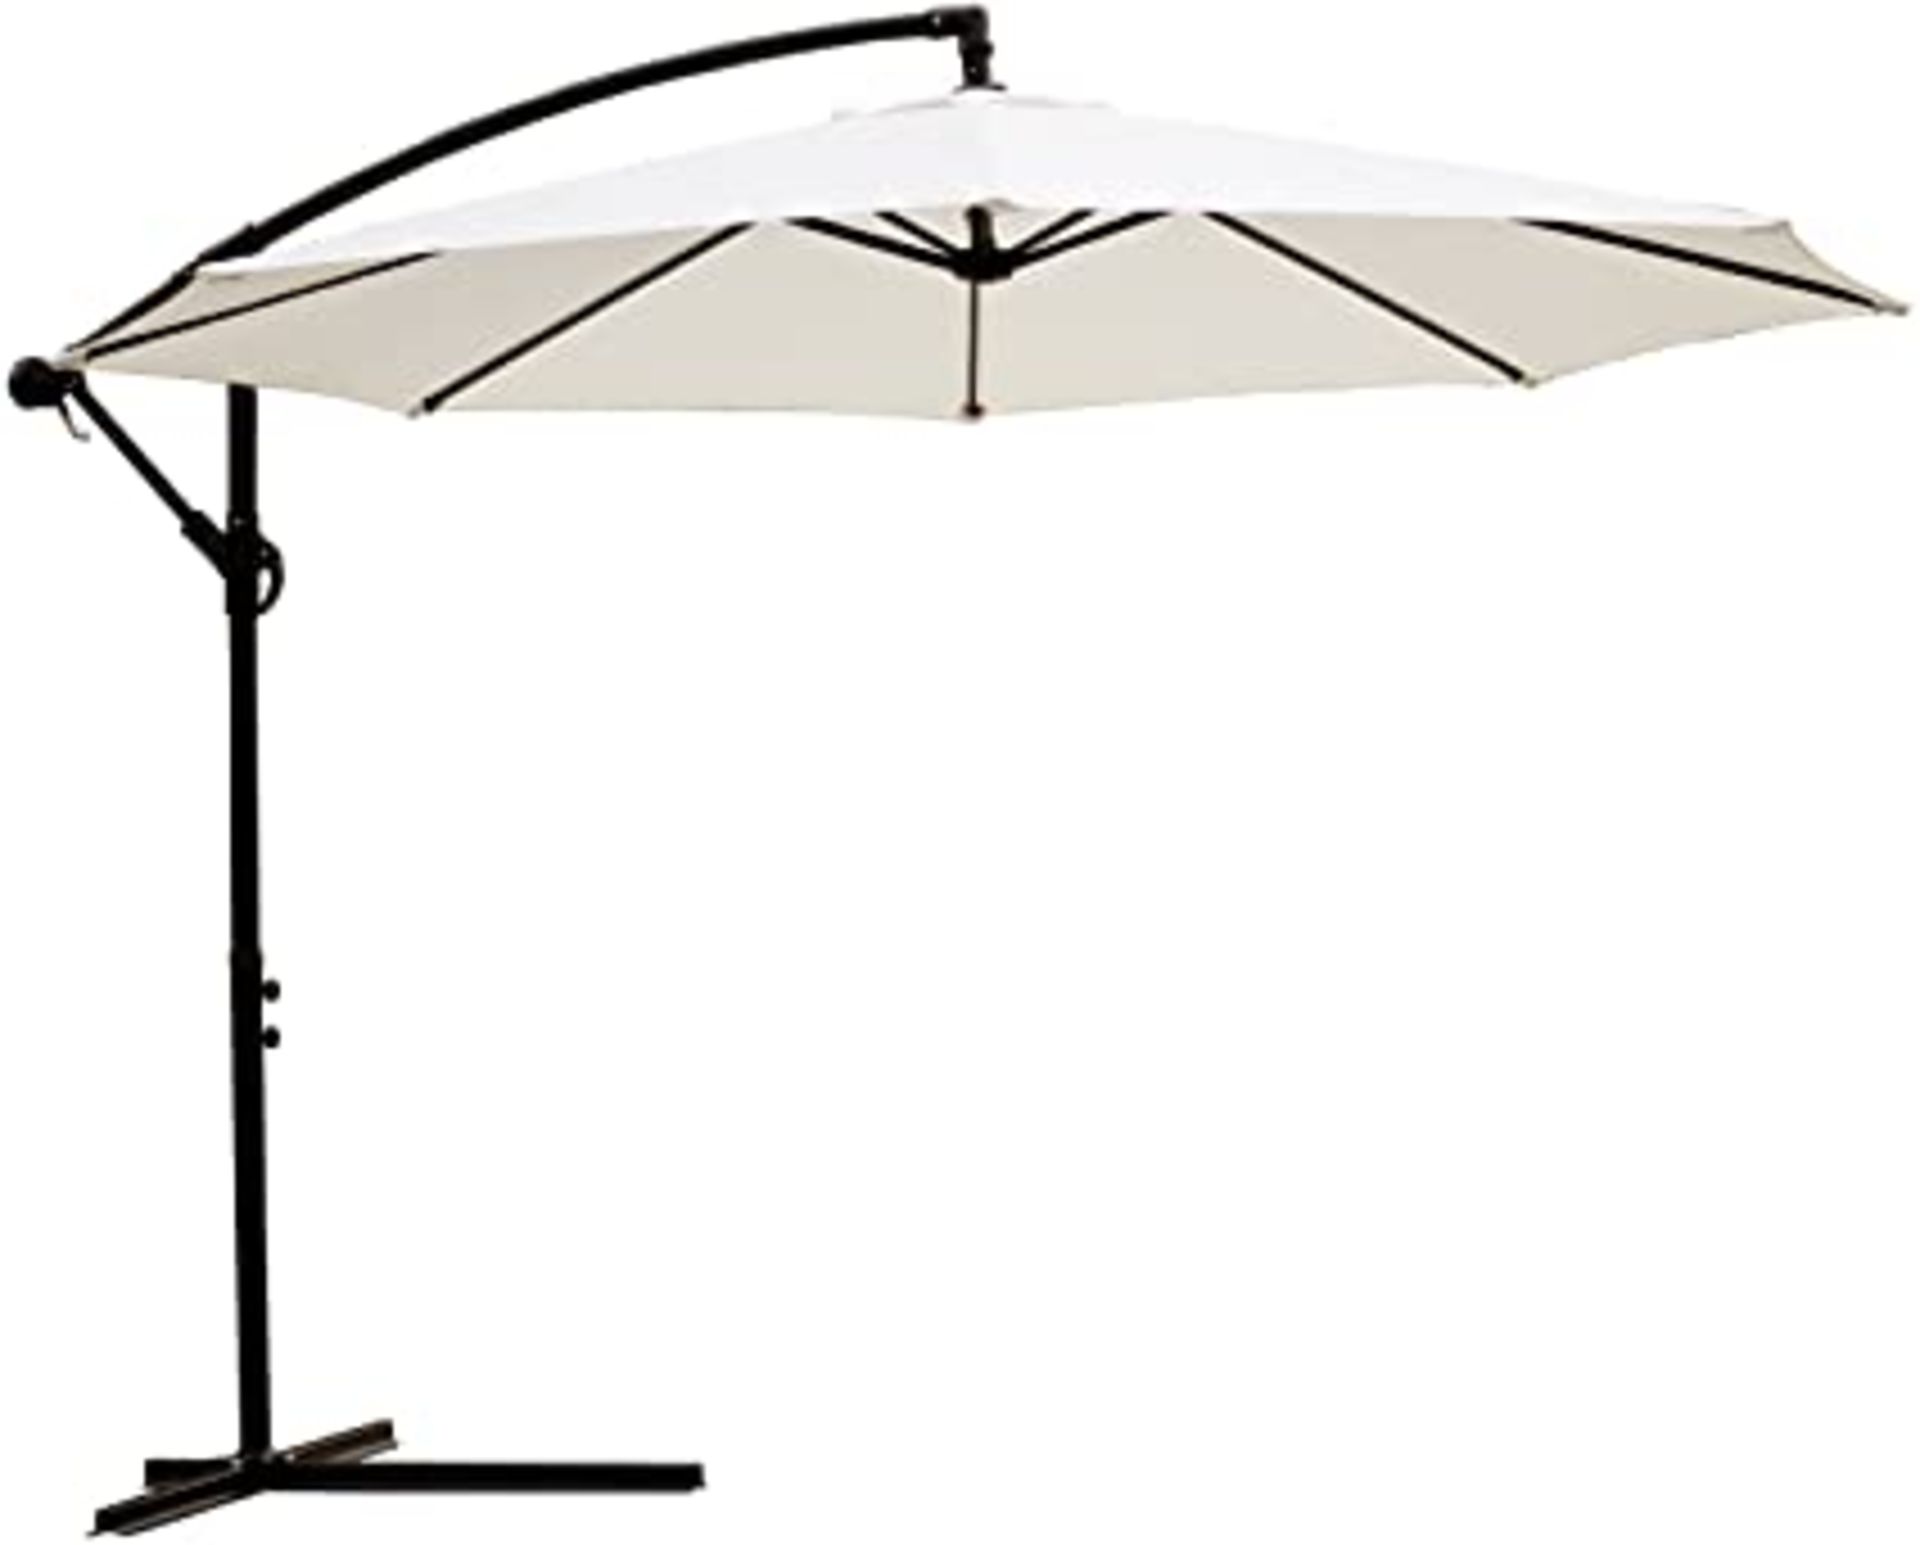 * 1x Ivory Banana Umbrella with Parasol Base. Parasol 3m Diameter. Steel Frame. 180g Polyester.